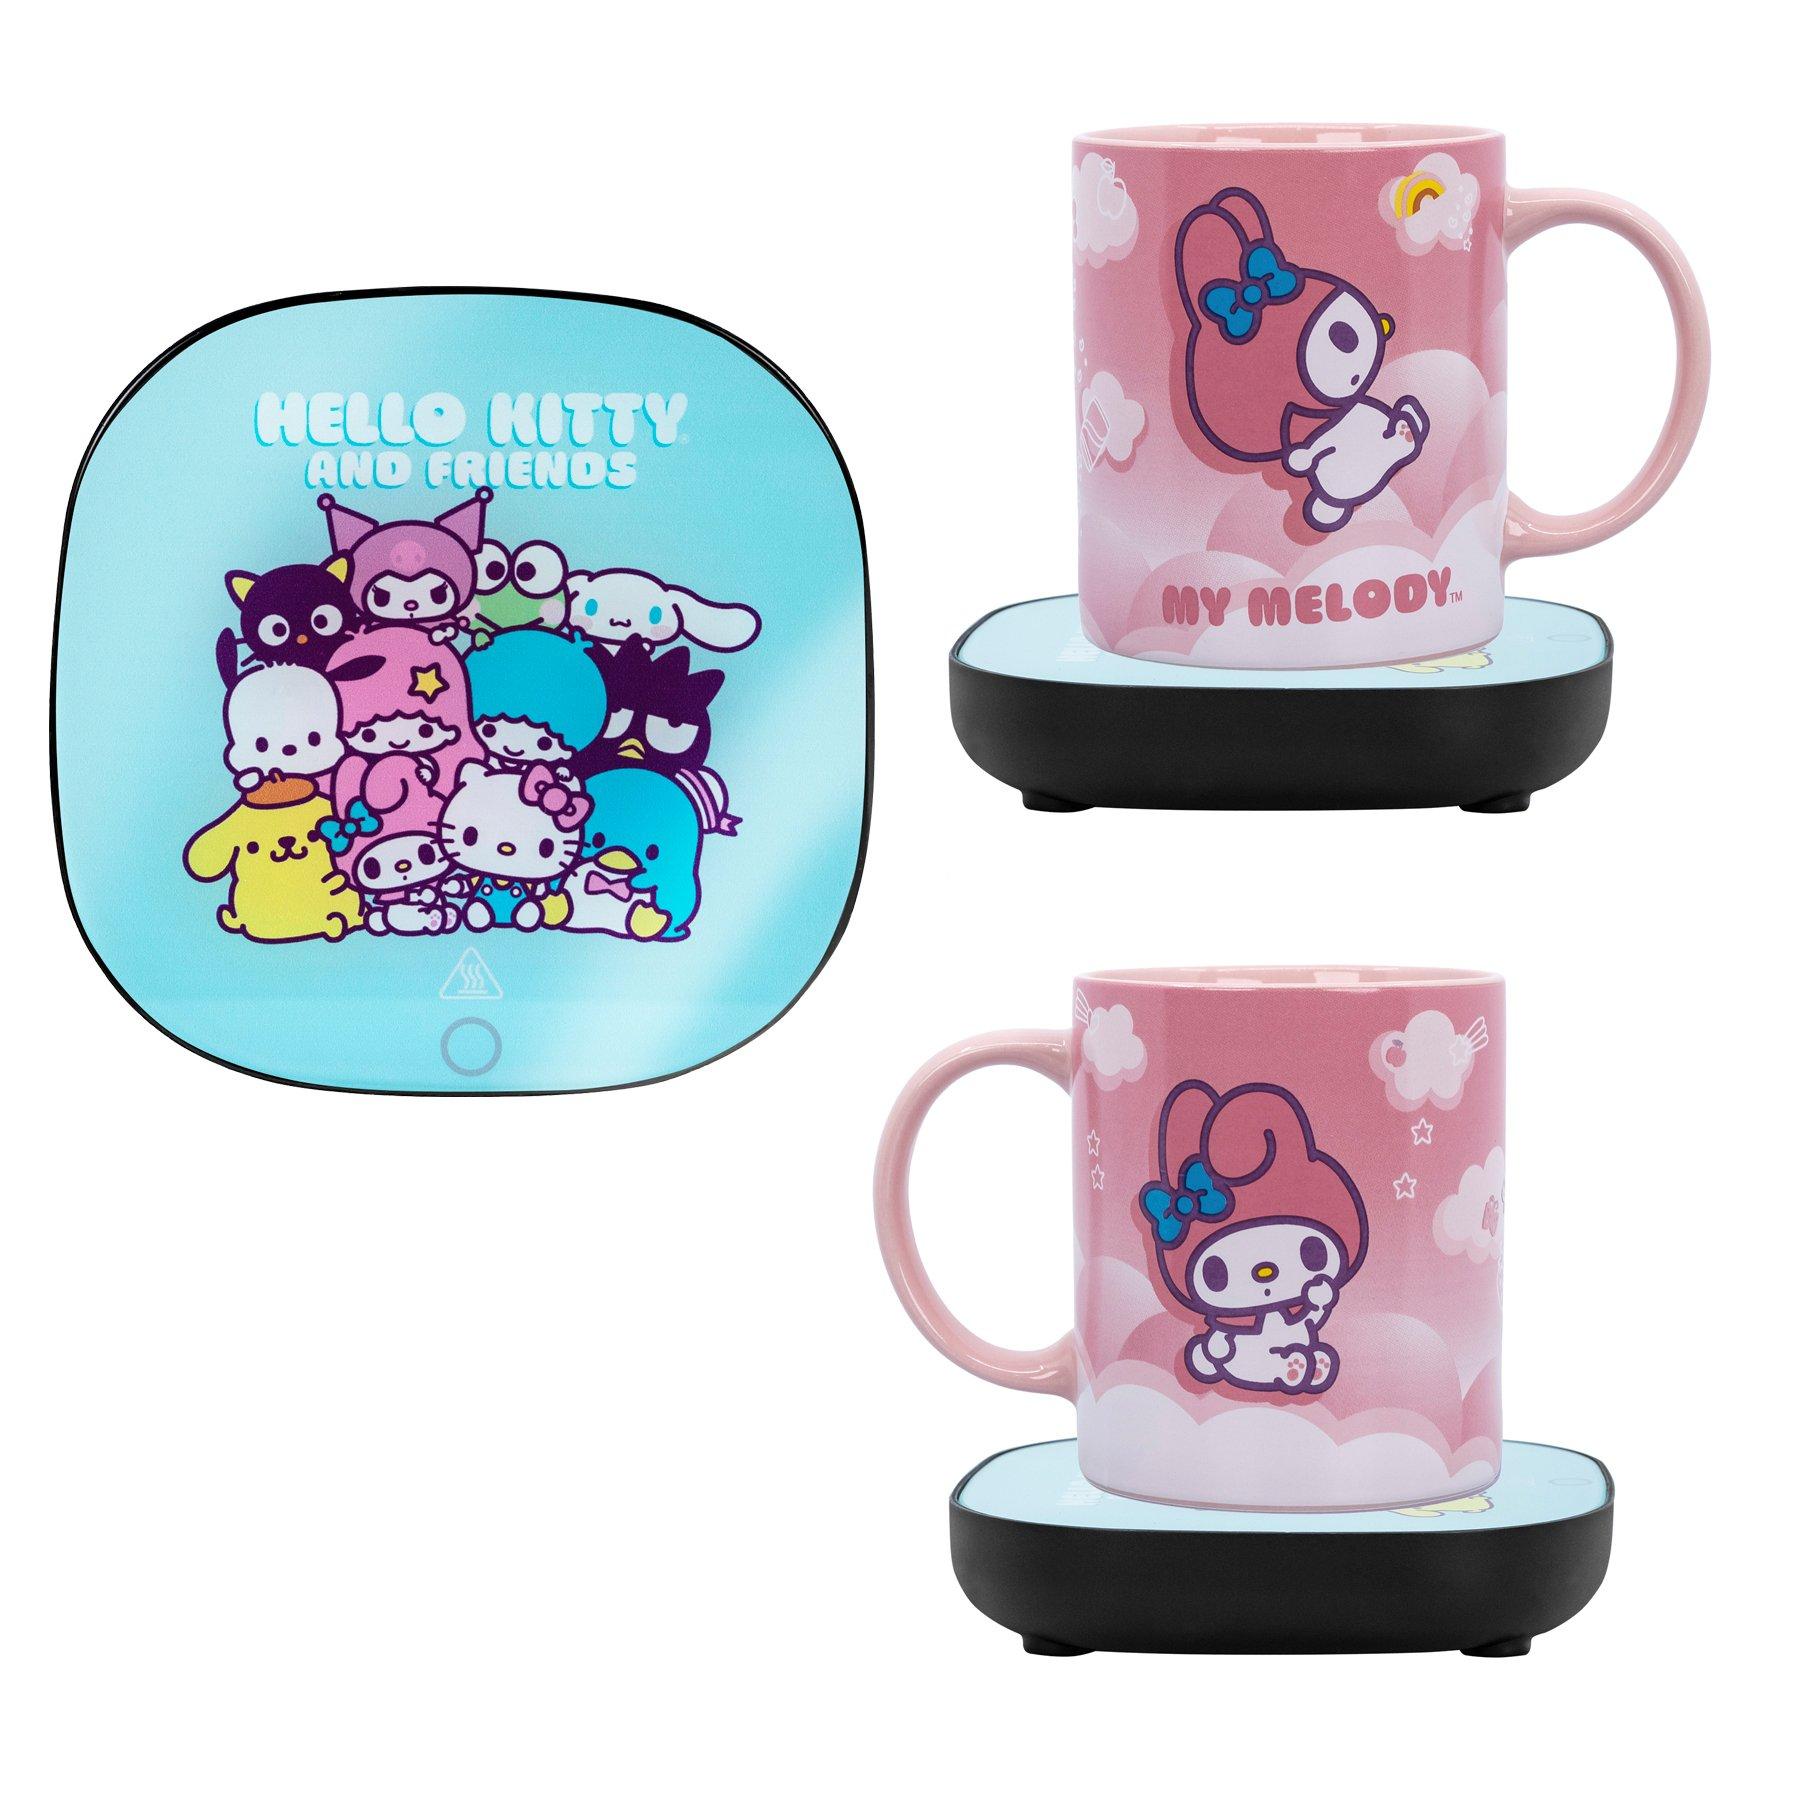 https://media.gamestop.com/i/gamestop/20005614/Hello-Kitty-and-Friends-My-Melody-Mug-Warmer-with-Mug-..